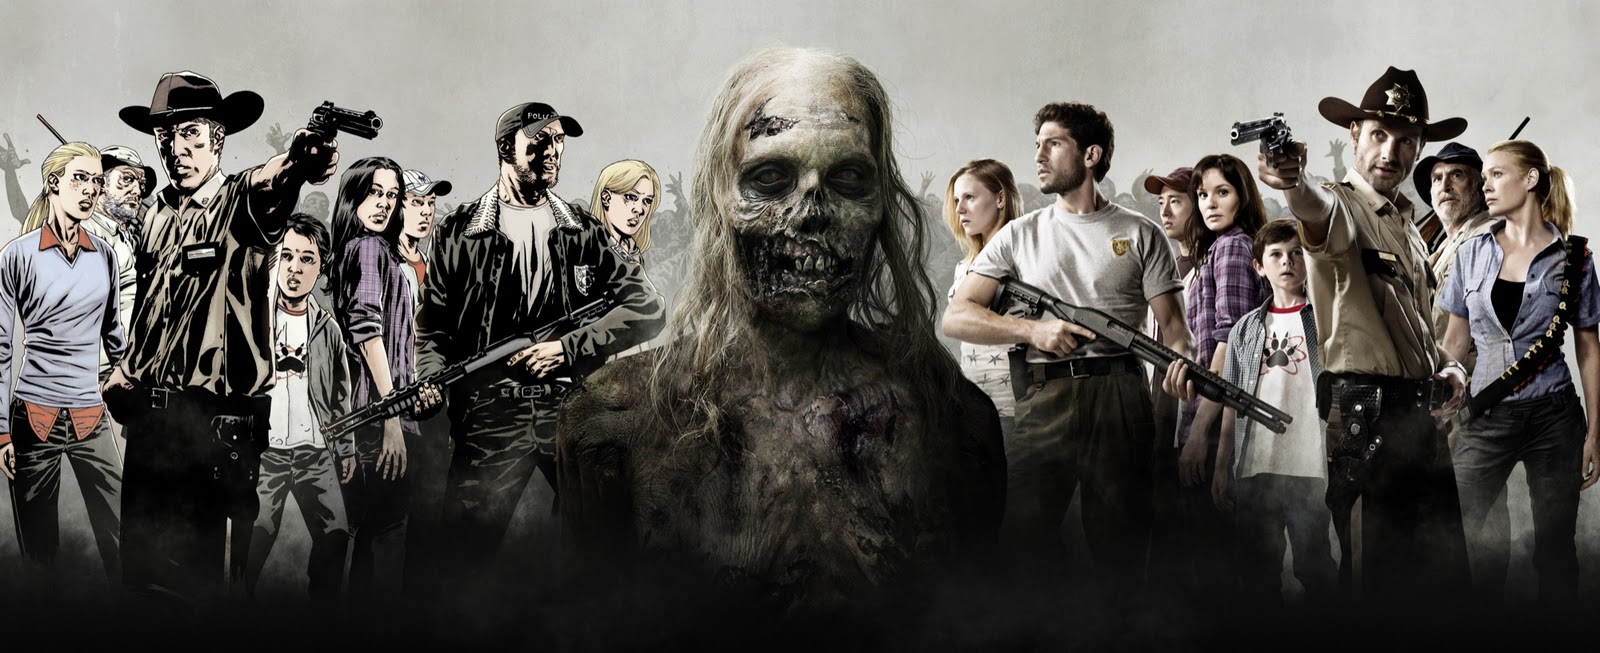 The Walking Dead The+walking+dead+comic+versus+tv